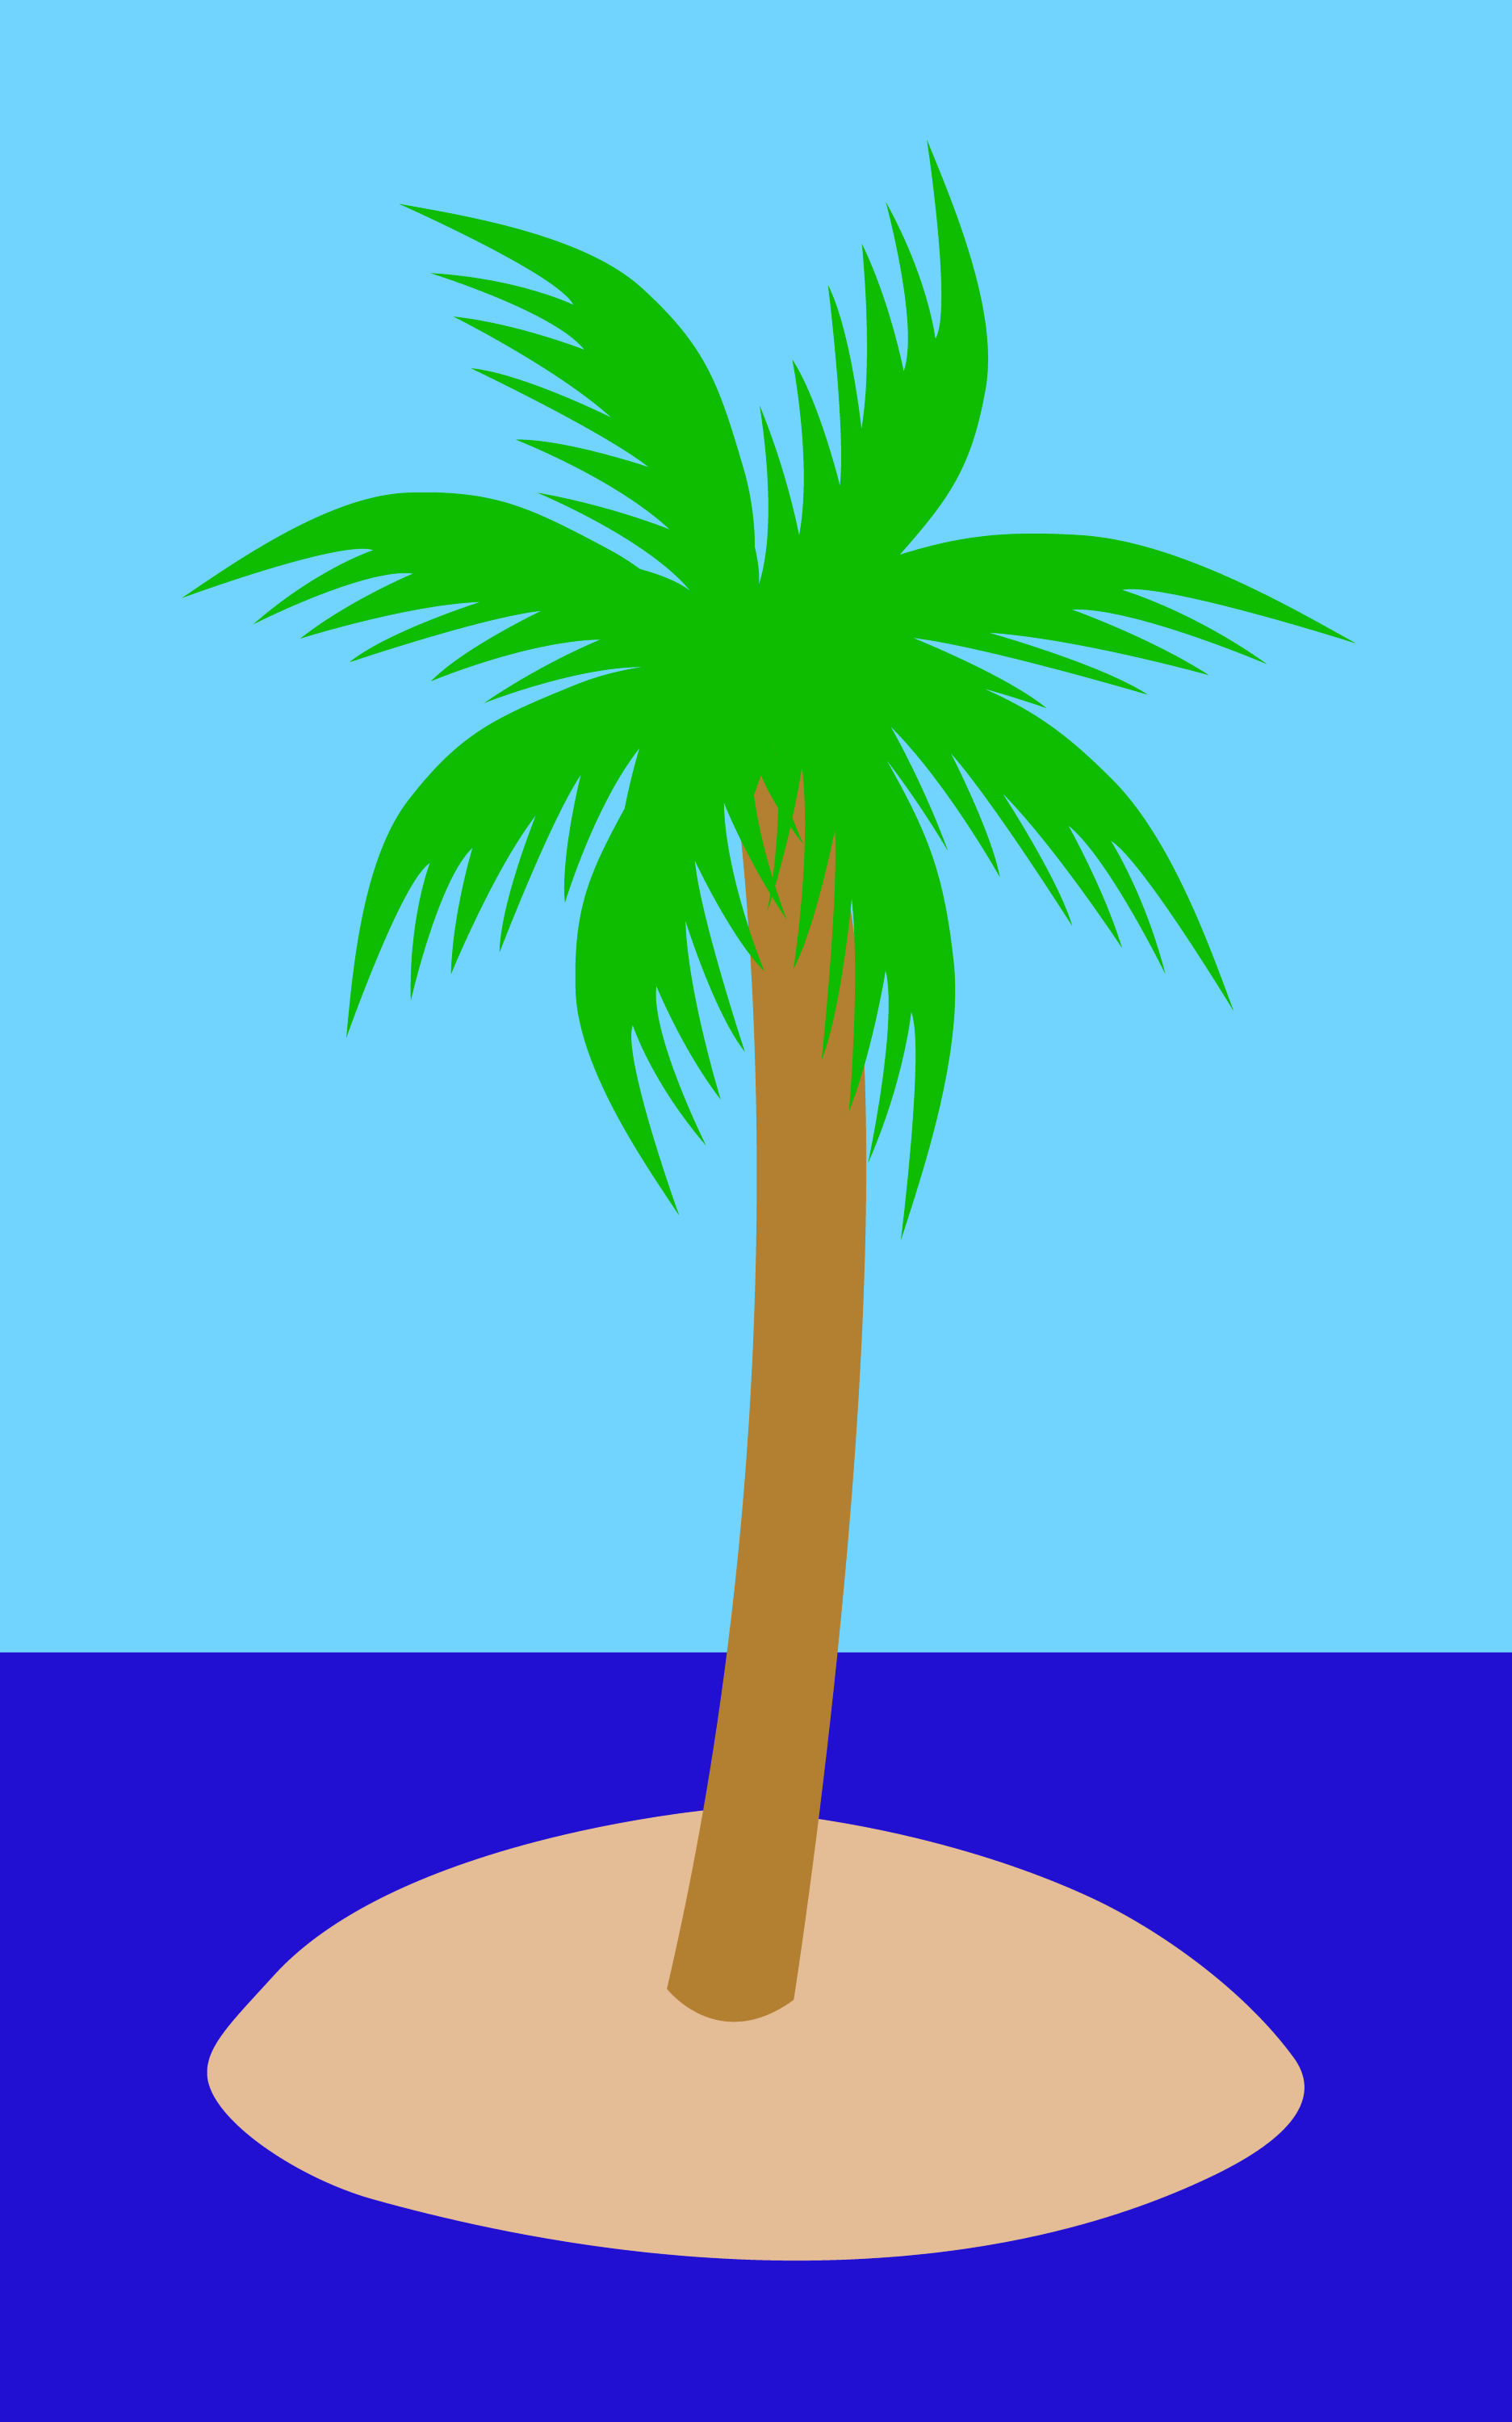 Simple Palm Tree on Tropical Island - Free Clip Art